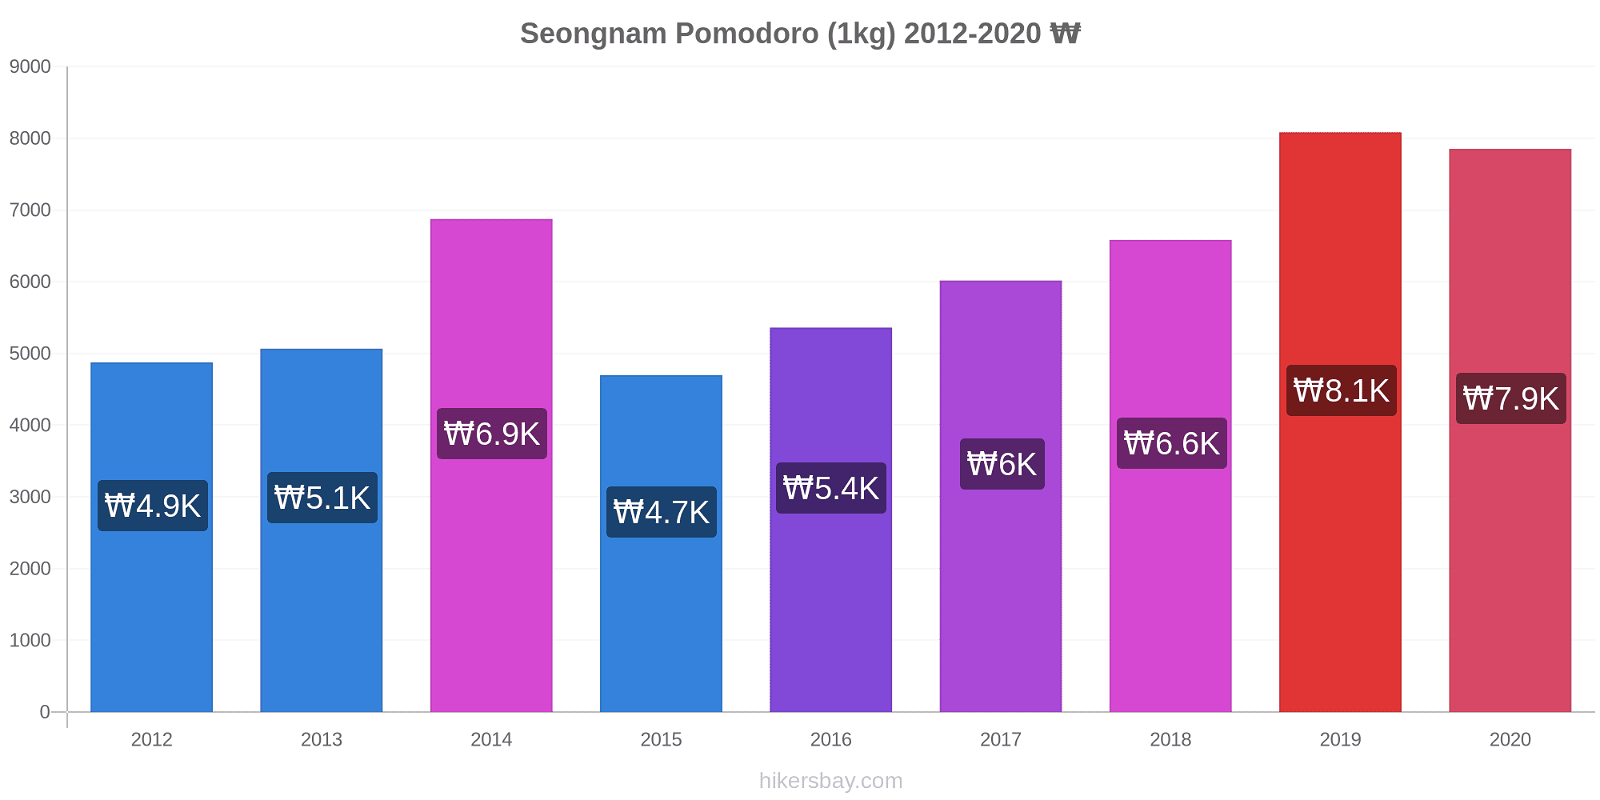 Seongnam variazioni di prezzo Pomodoro (1kg) hikersbay.com